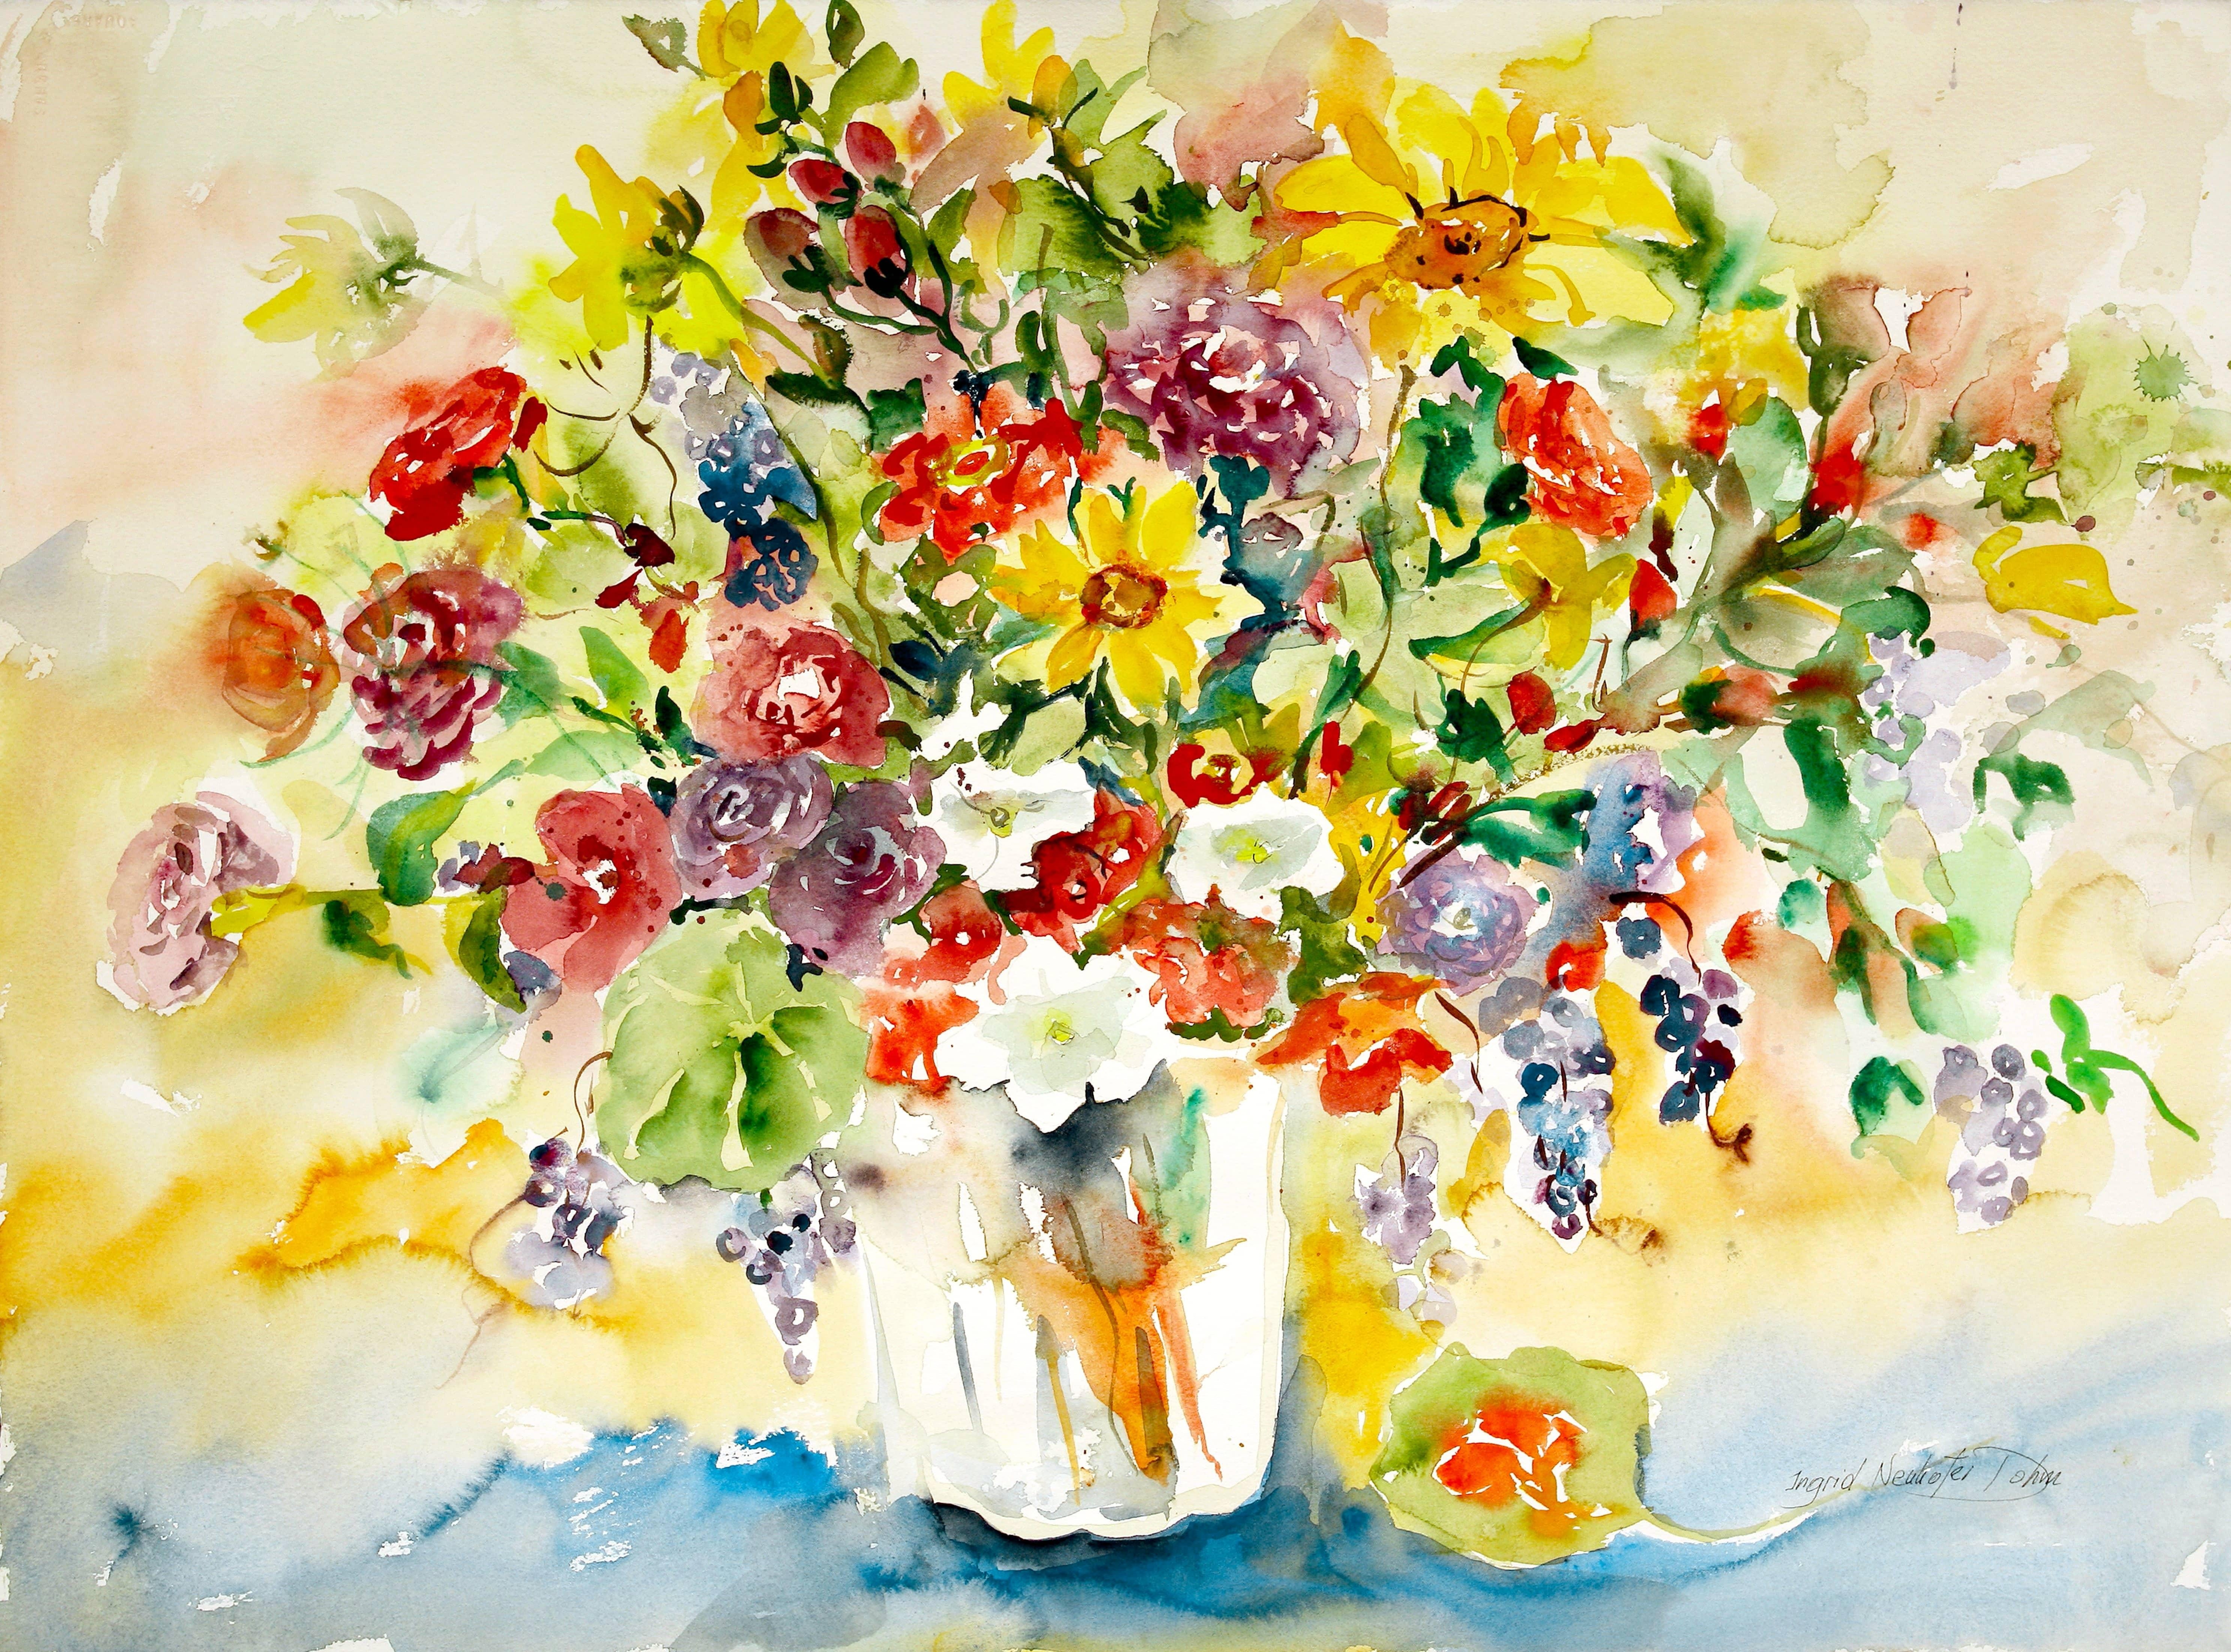 Arrangement I, Original Watercolor Painting, 2014